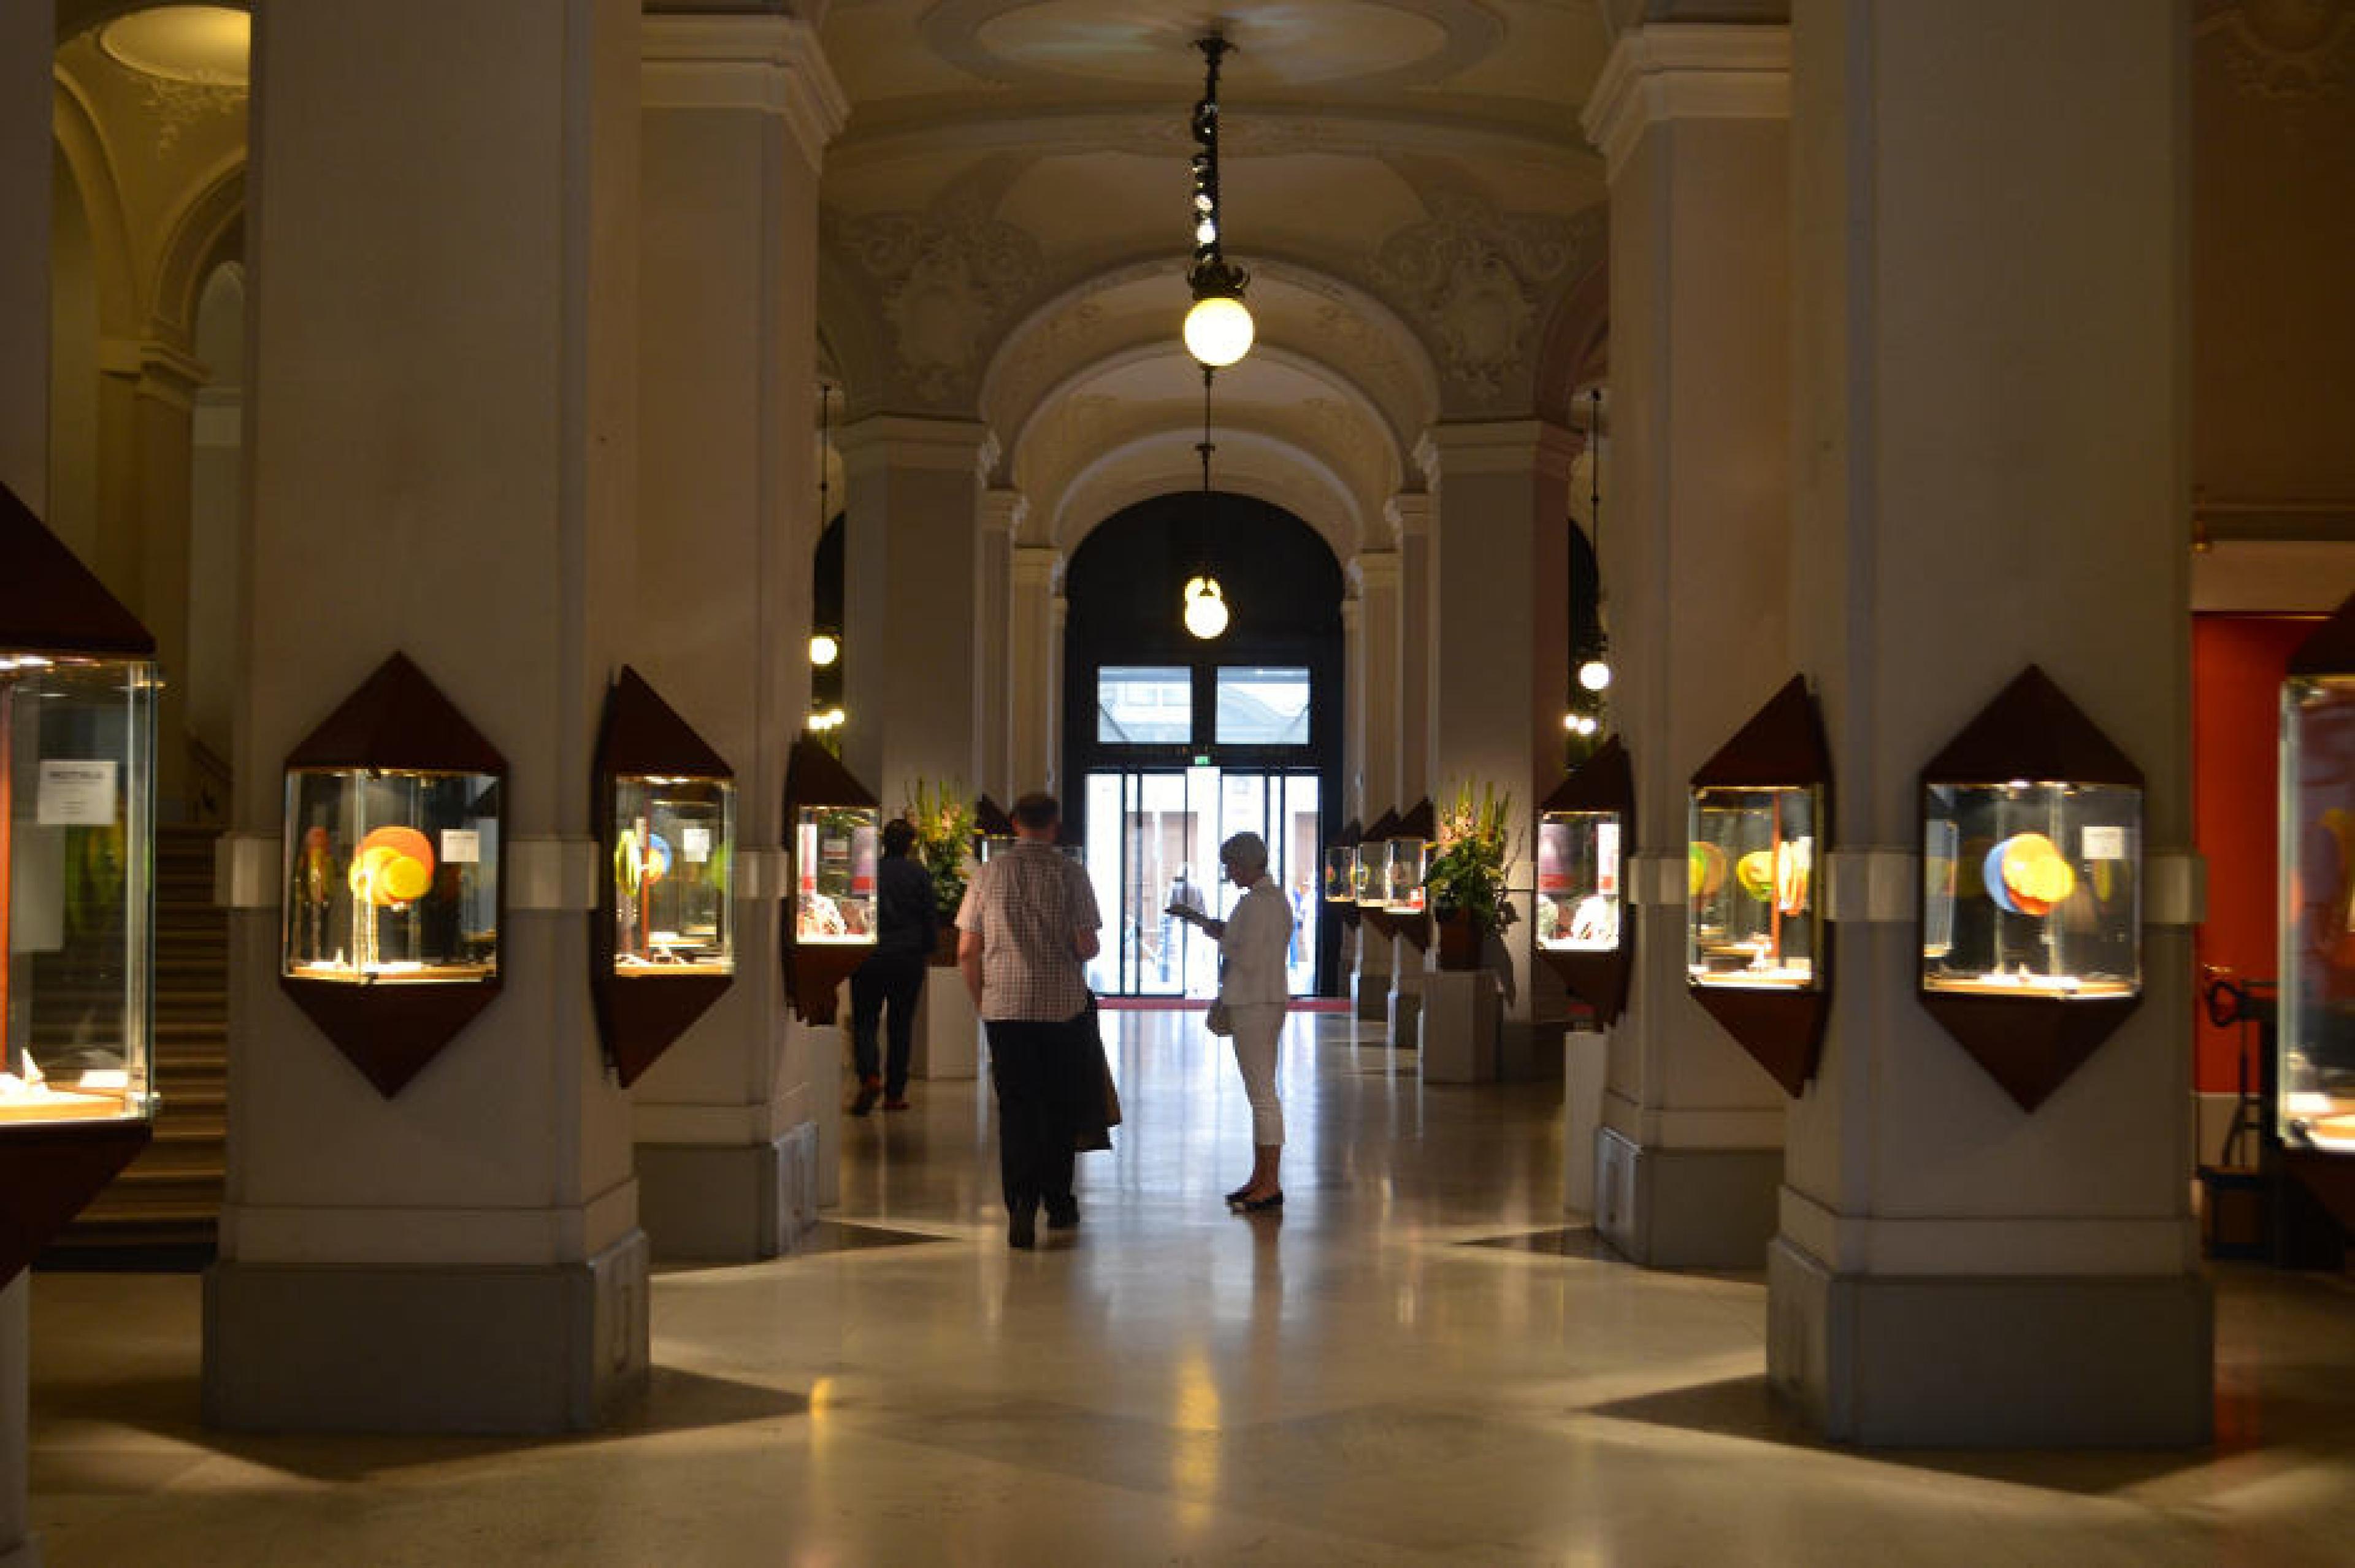 Interior View - Dorotheum, Vienna, Austria